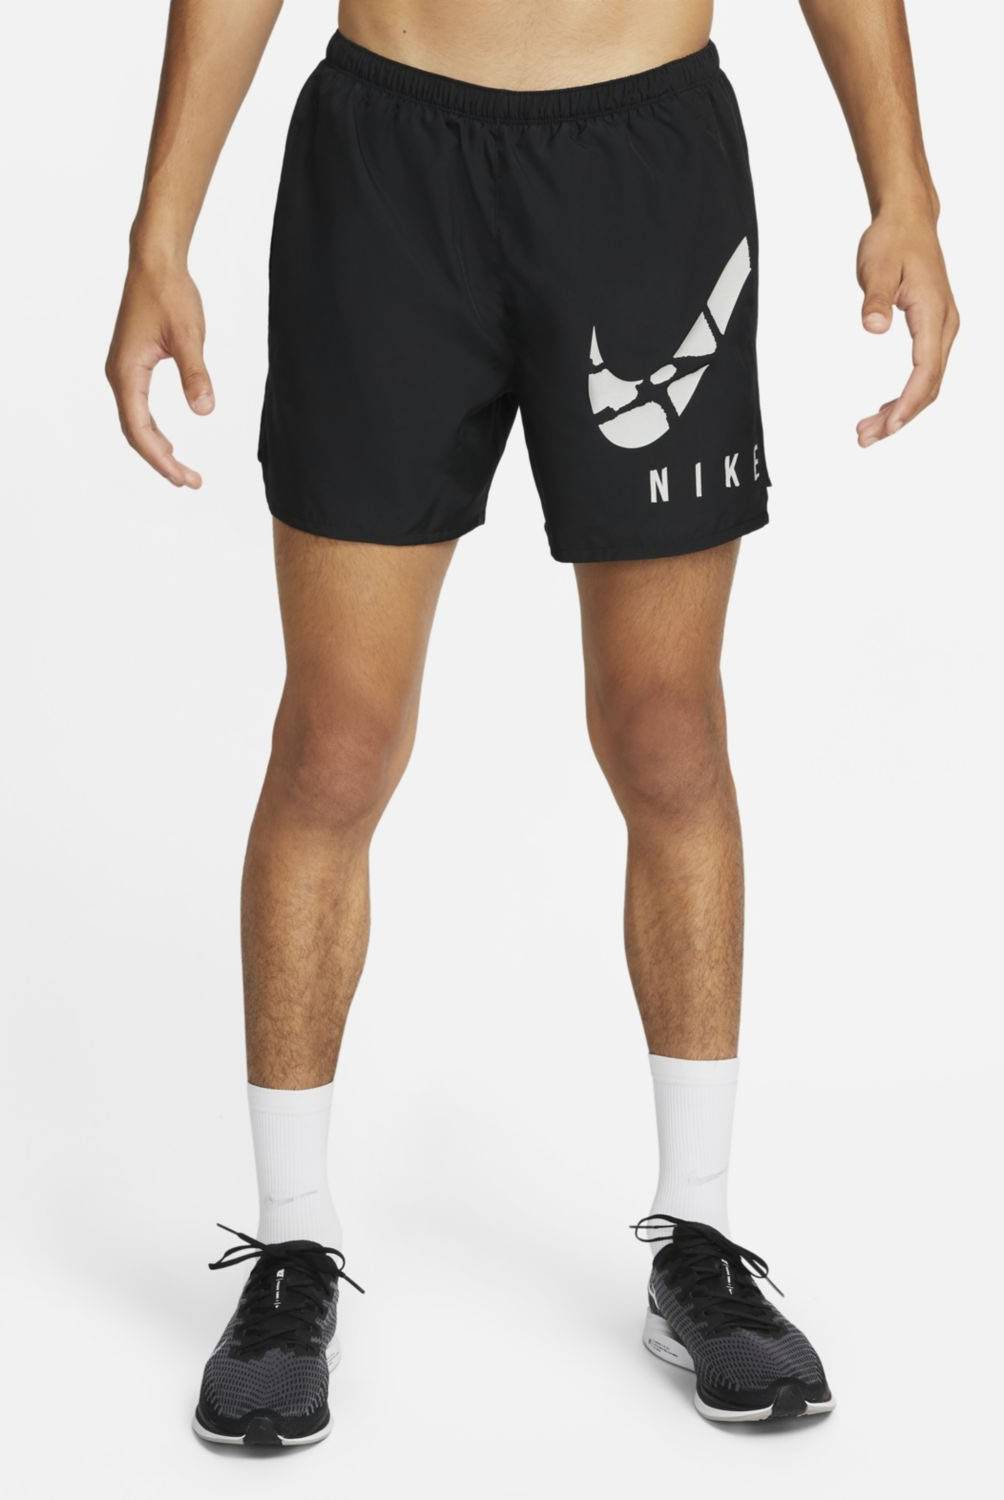 NIKE - Nike Shorts Deportivo Running Hombre